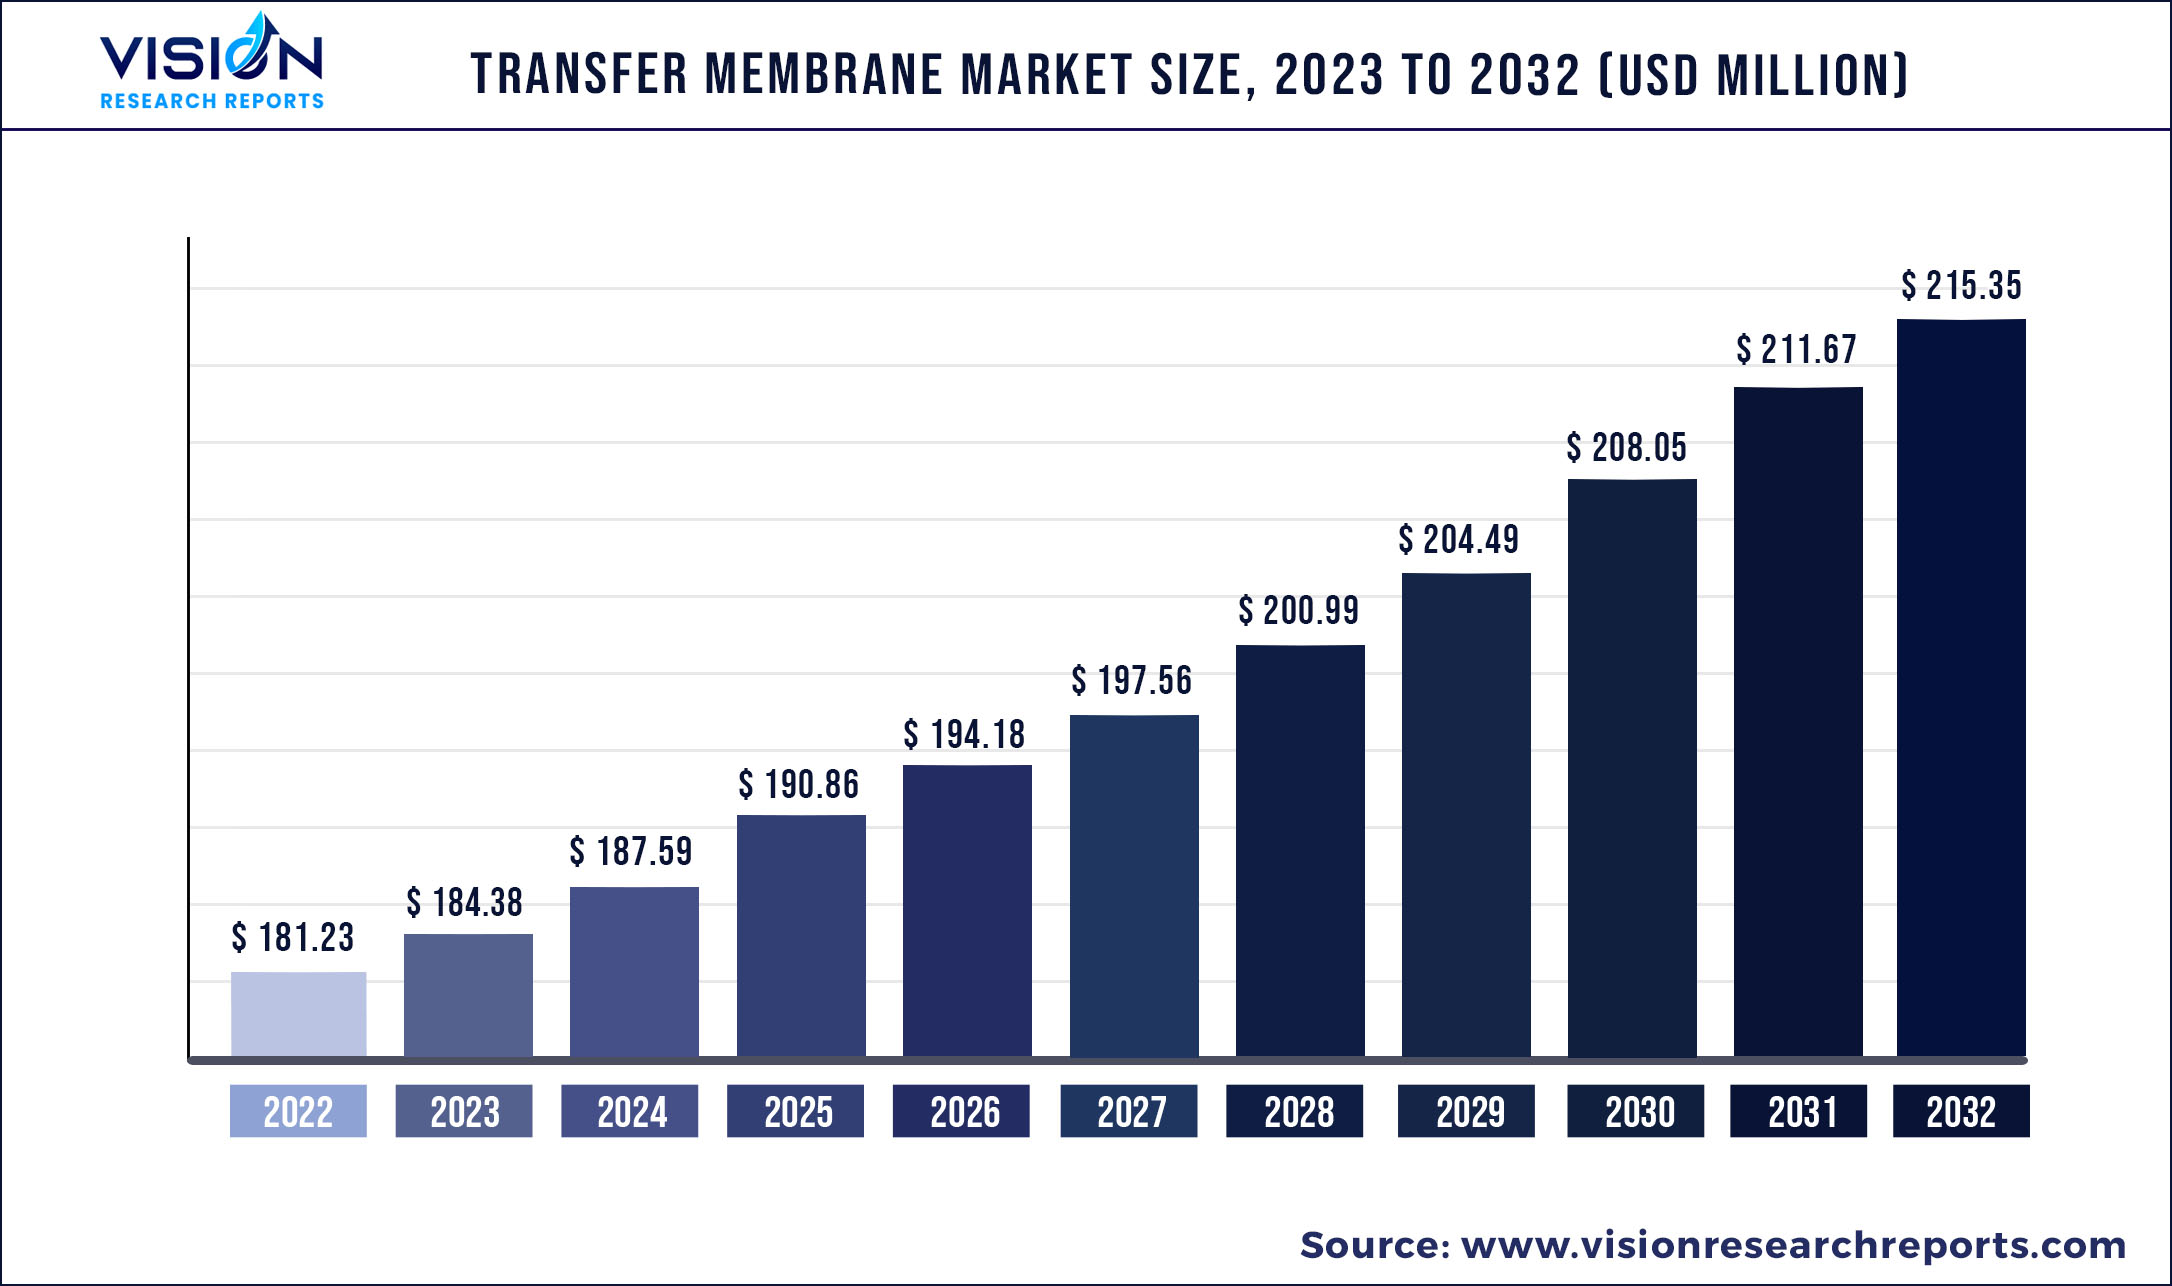 Transfer Membrane Market Size 2023 to 2032